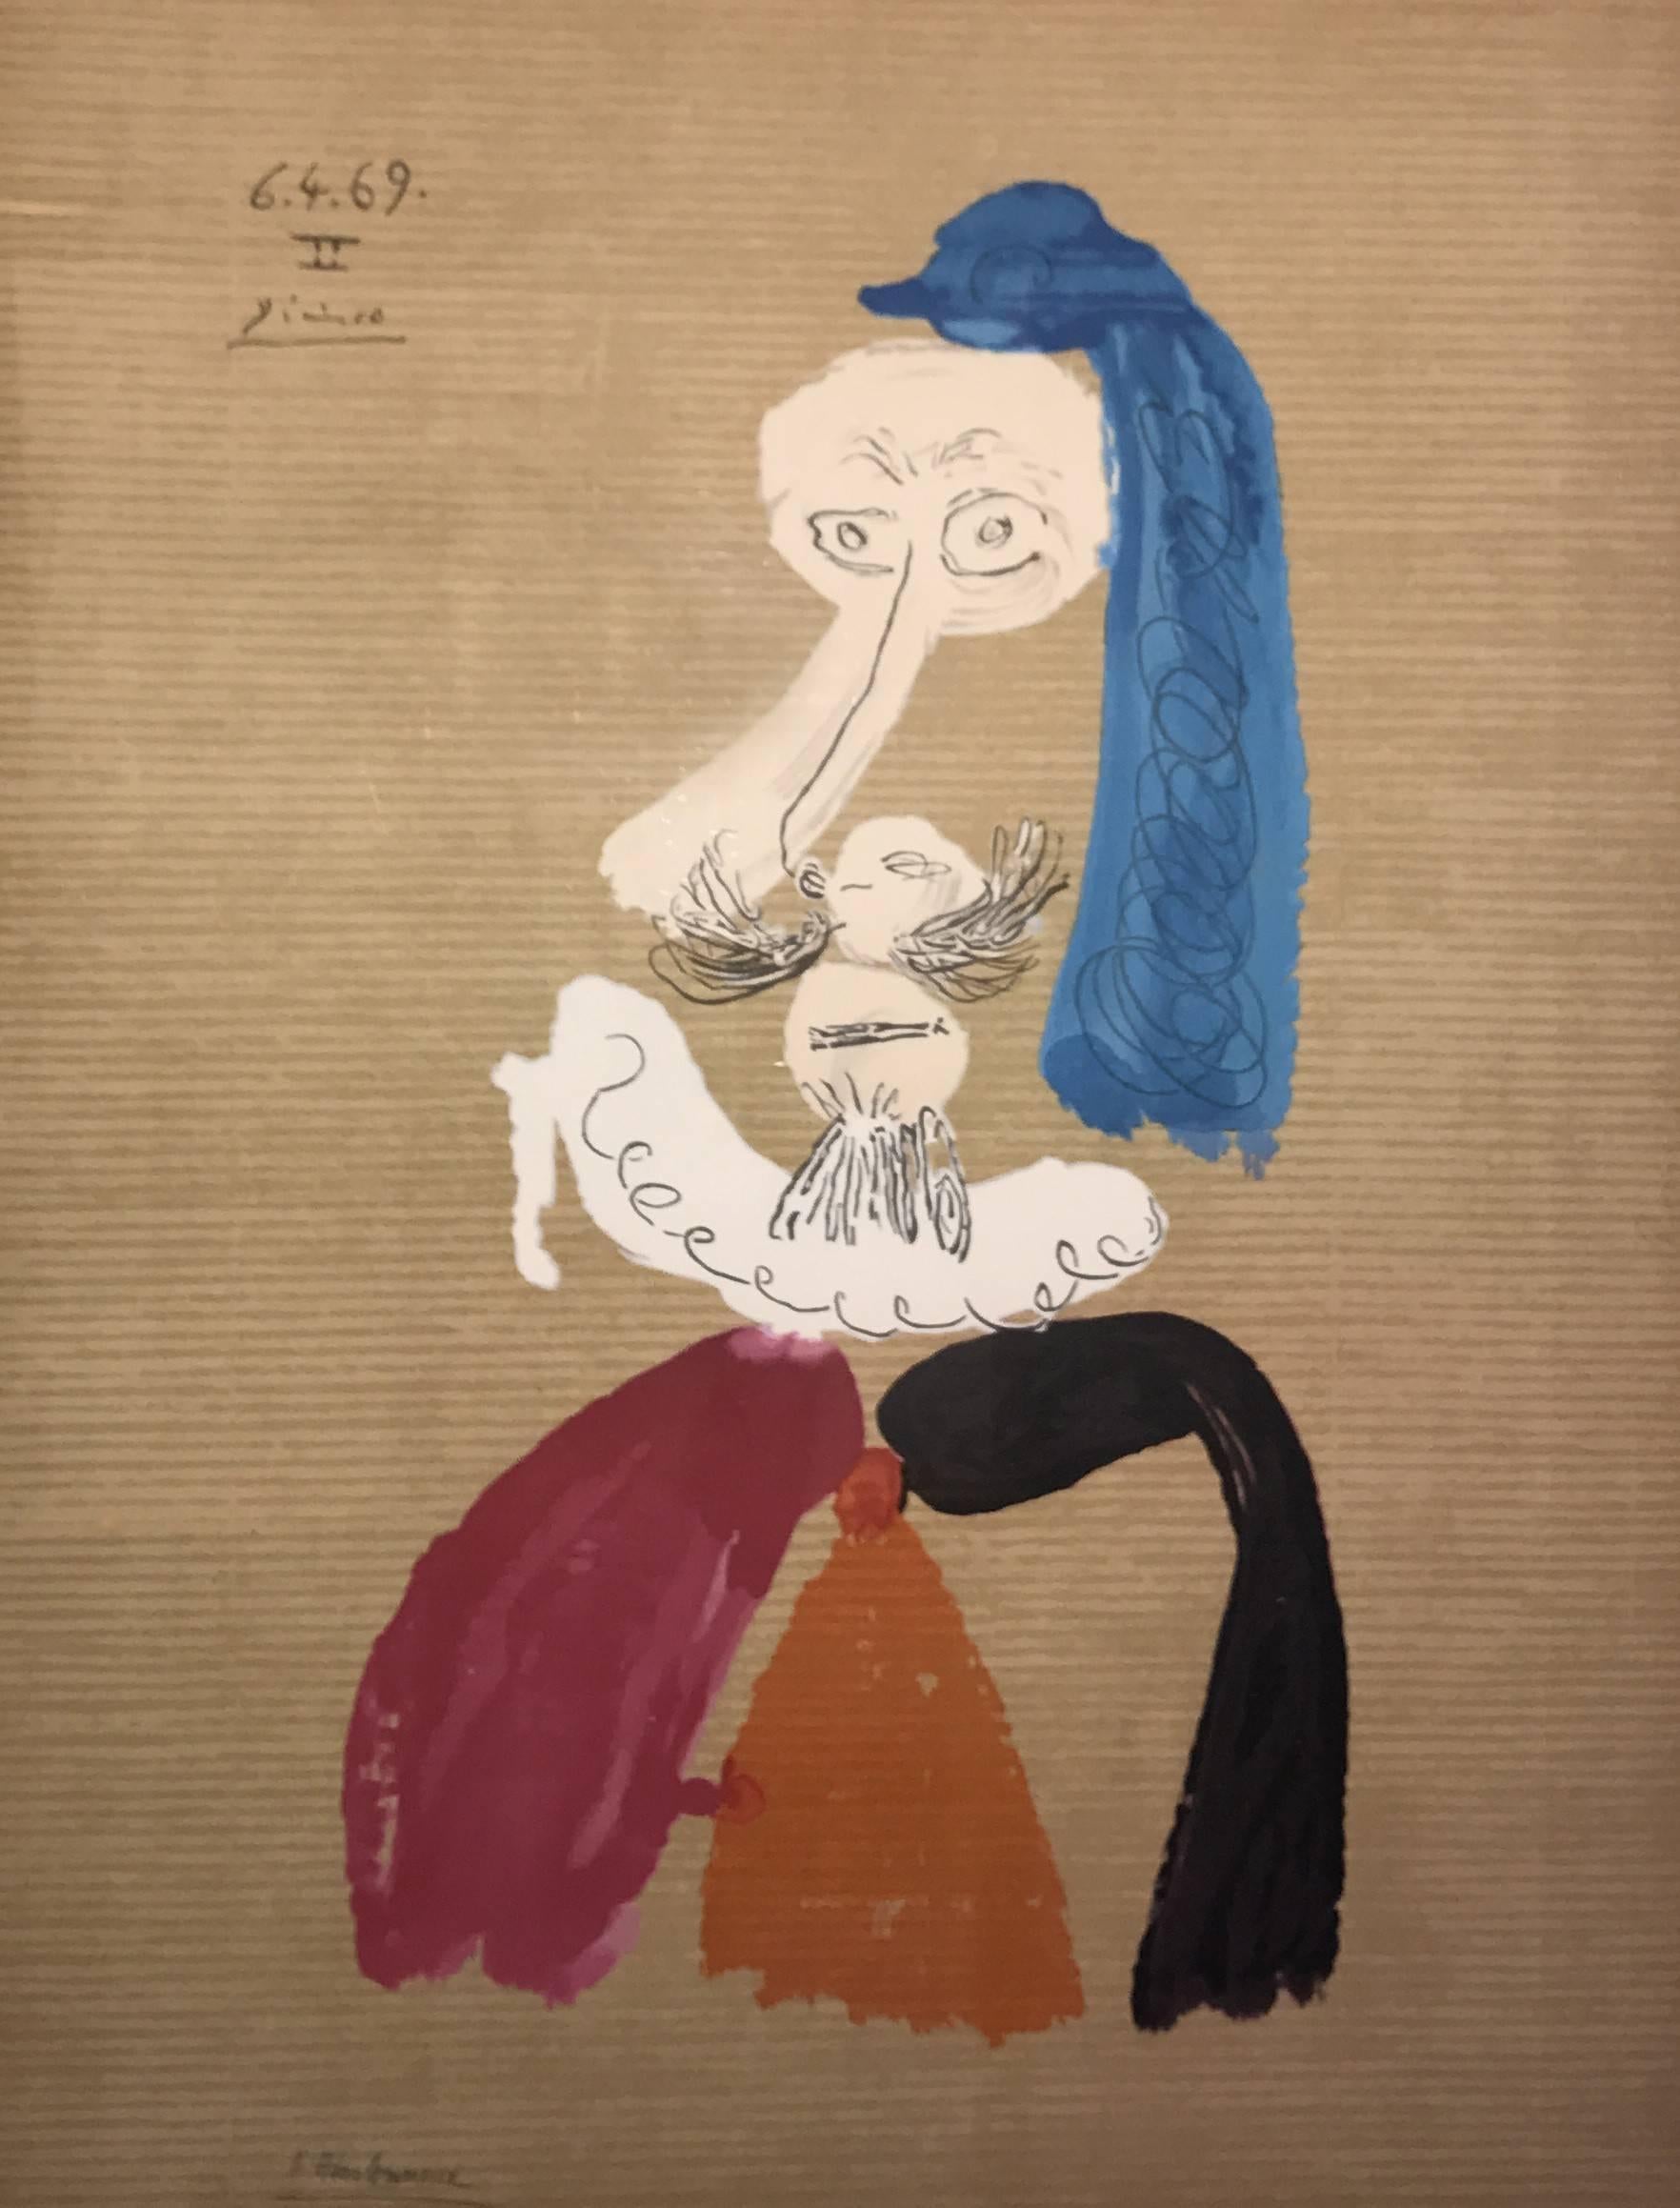 (after) Pablo Picasso Portrait Print - 6.4.69 II, from Portraits Imaginaires